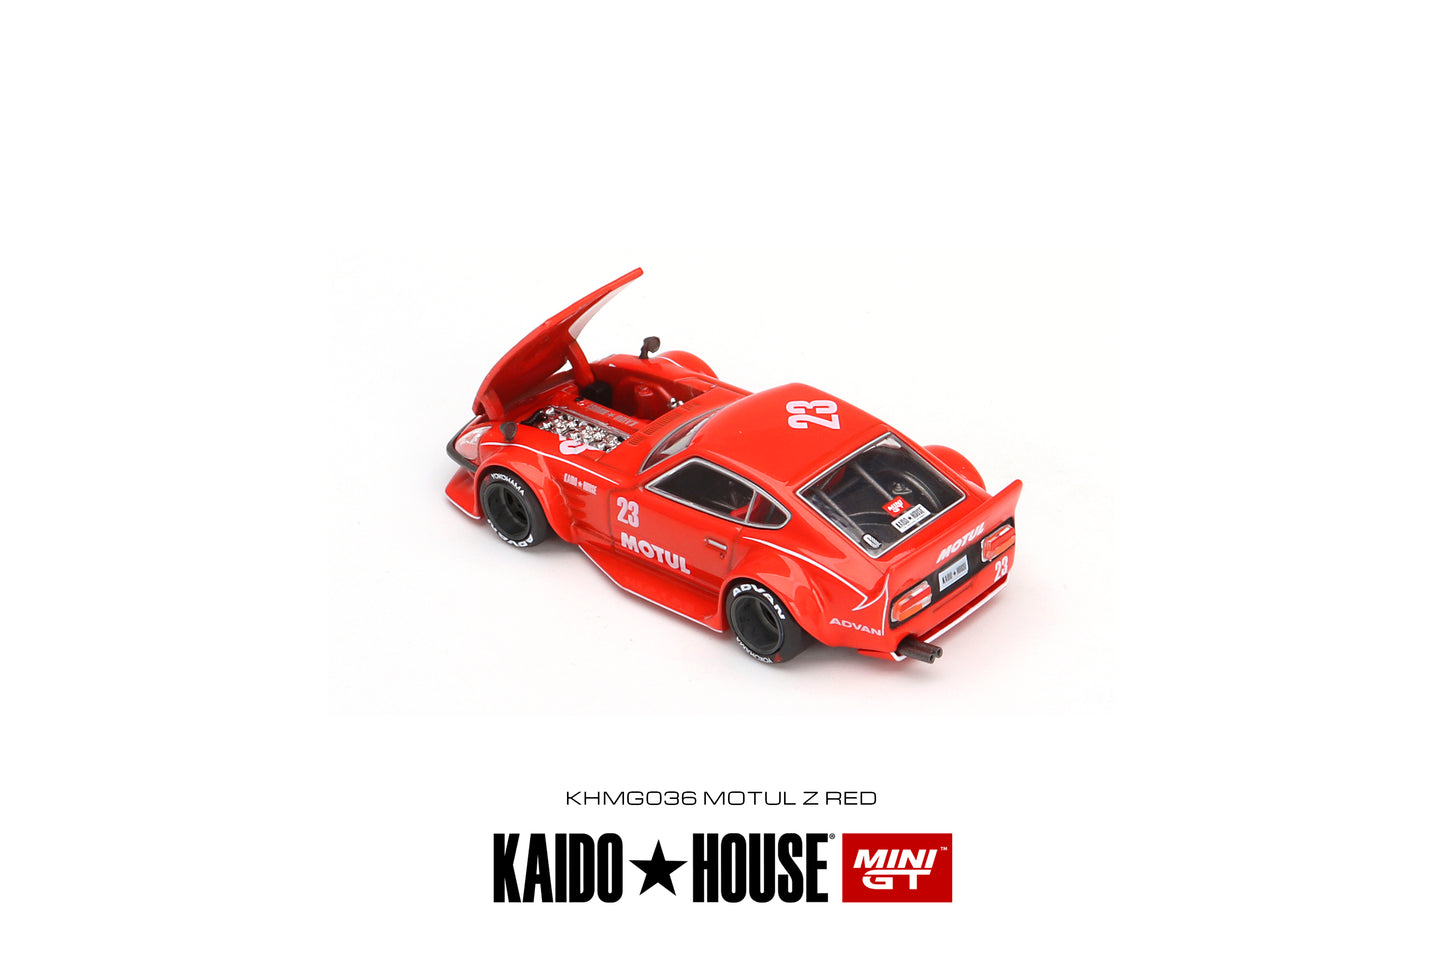 Mini GT Kaido House 036 Datsun Fairlady Z Red 1:64